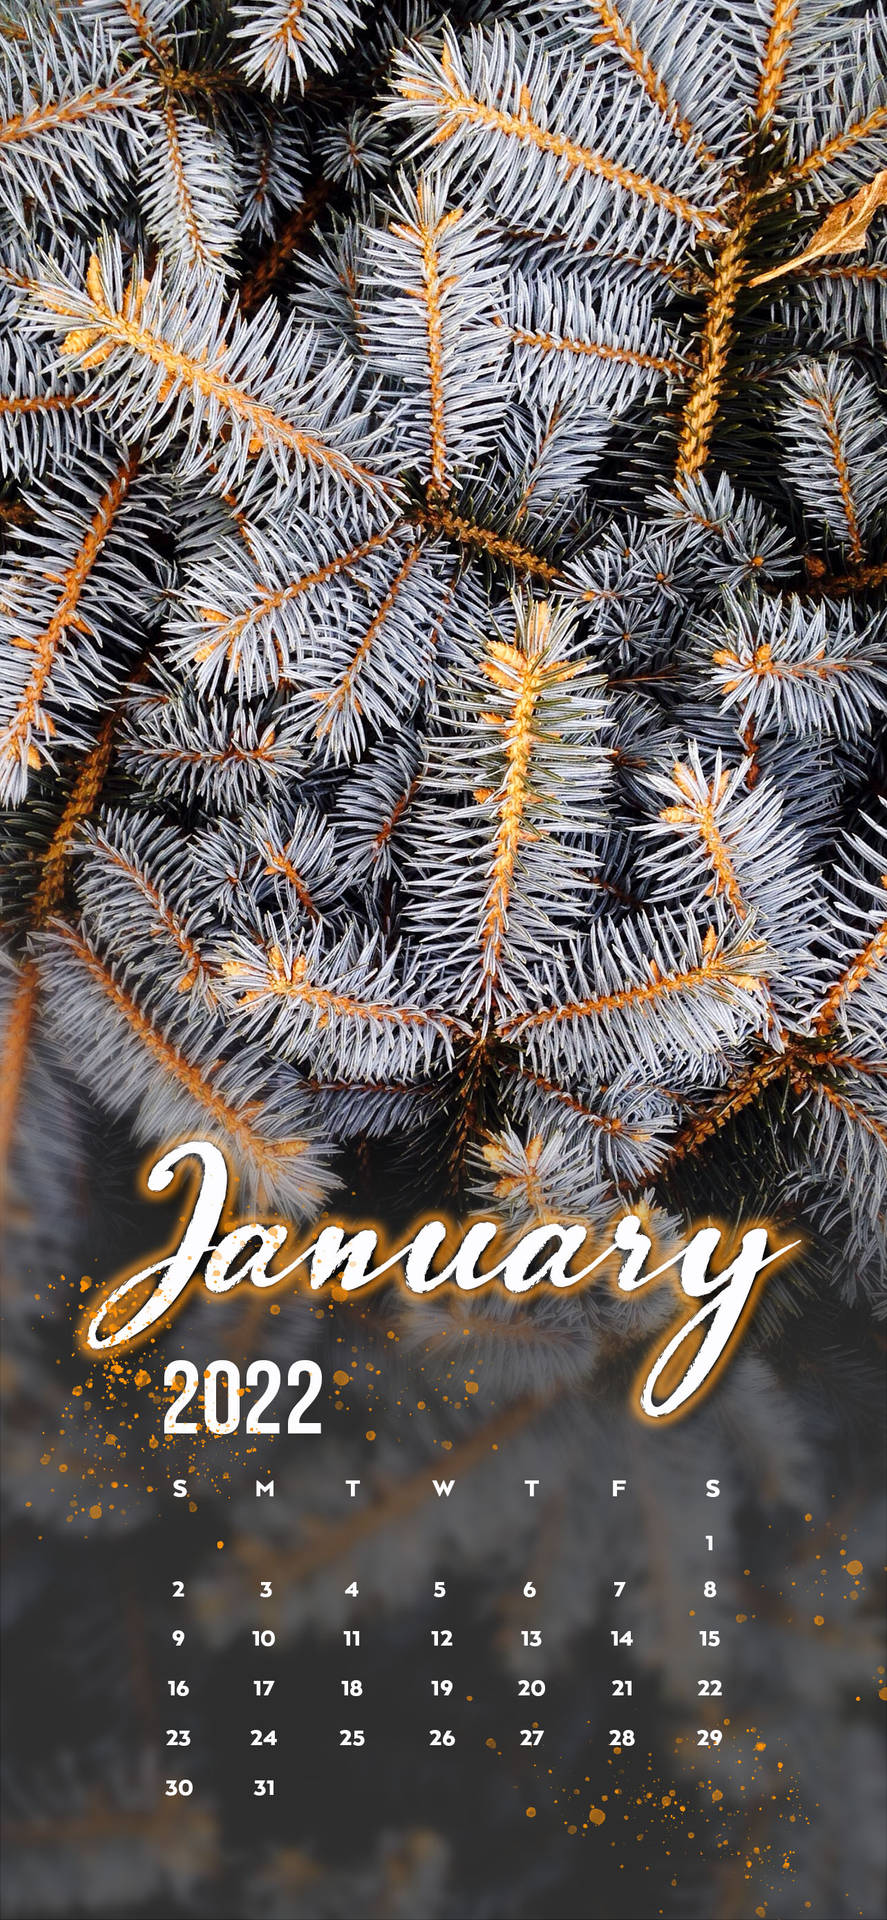 January 2022 White Pine Tree Wallpaper